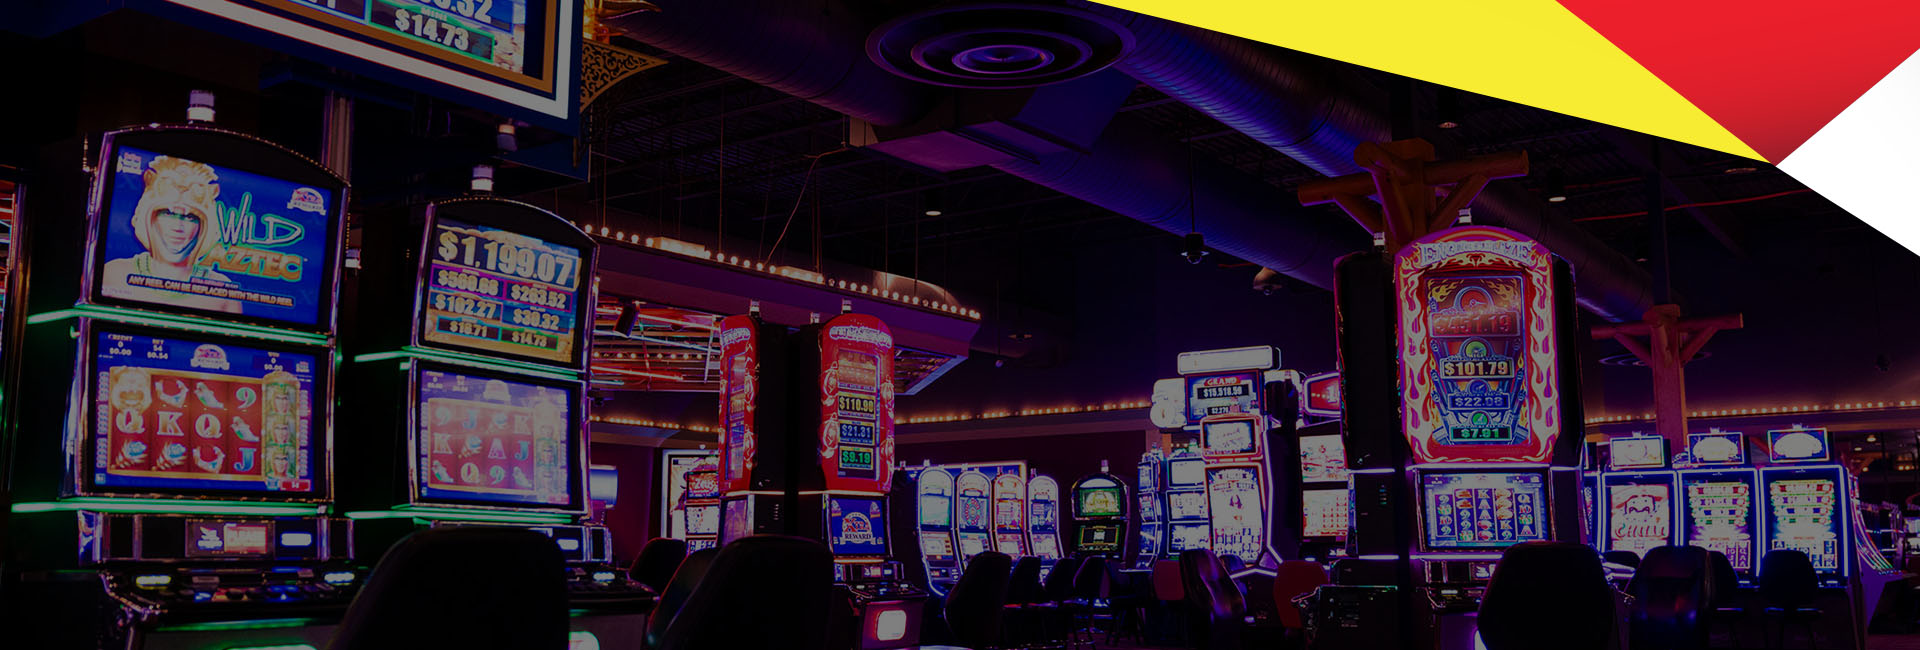 Slot city casino game